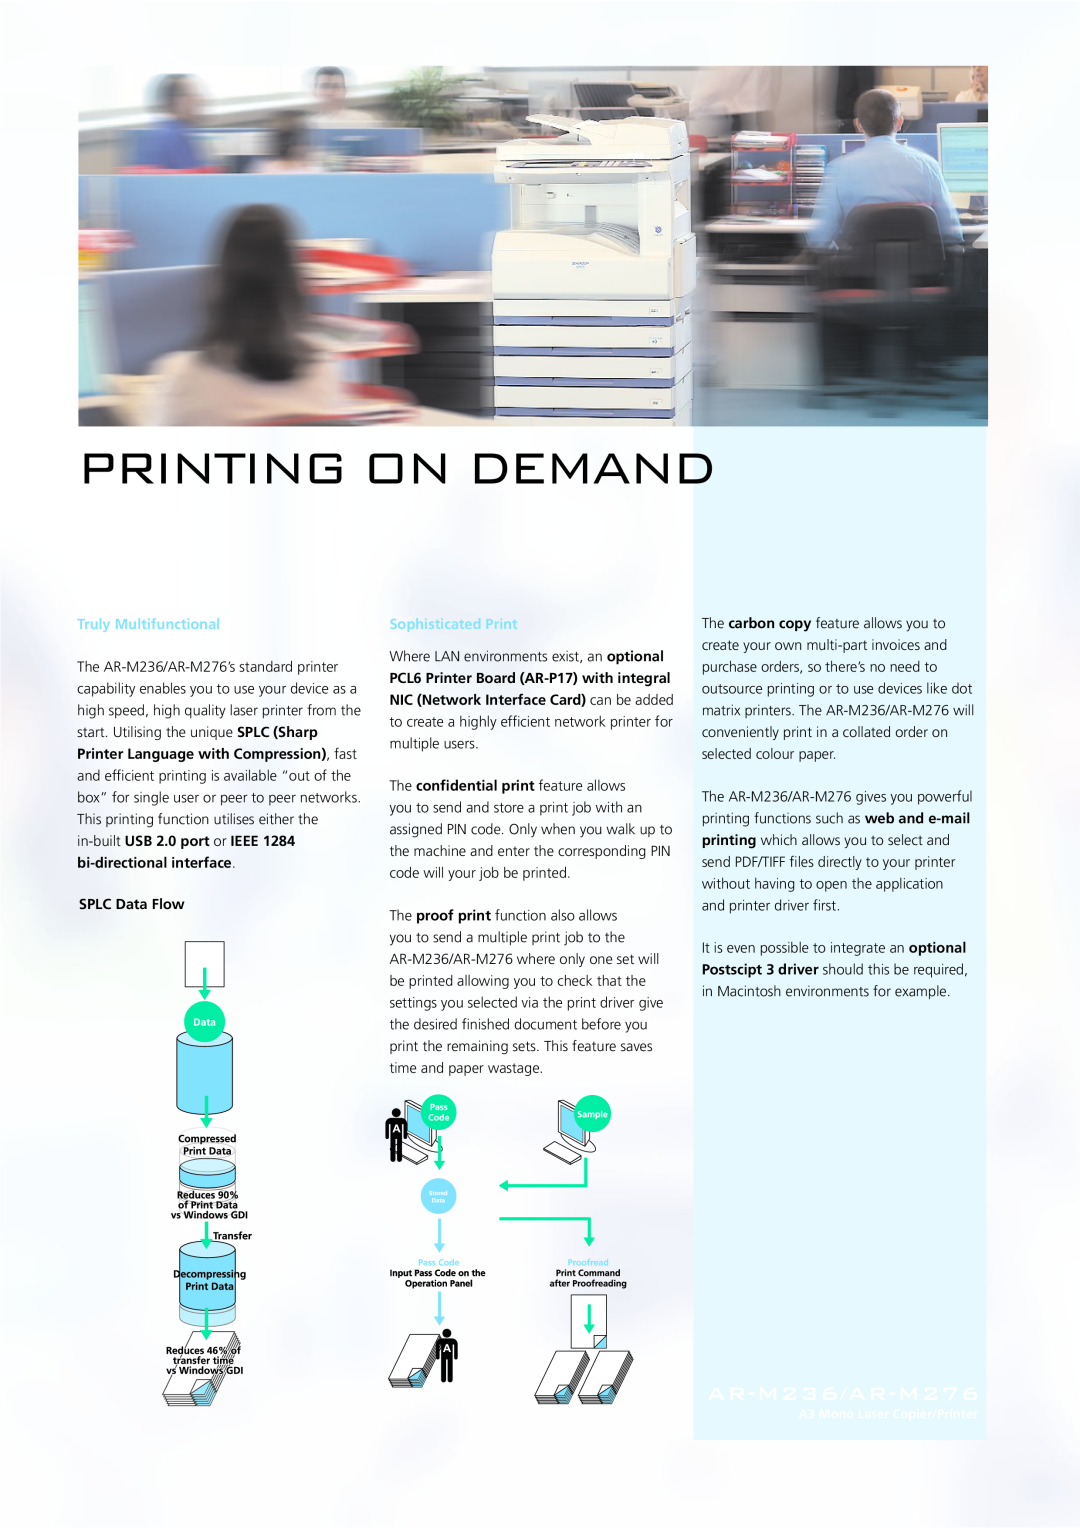 Sharp manual Printing On Demand, Truly Multifunctional, SPLC Data Flow, Sophisticated Print, AR-M236/AR-M276 